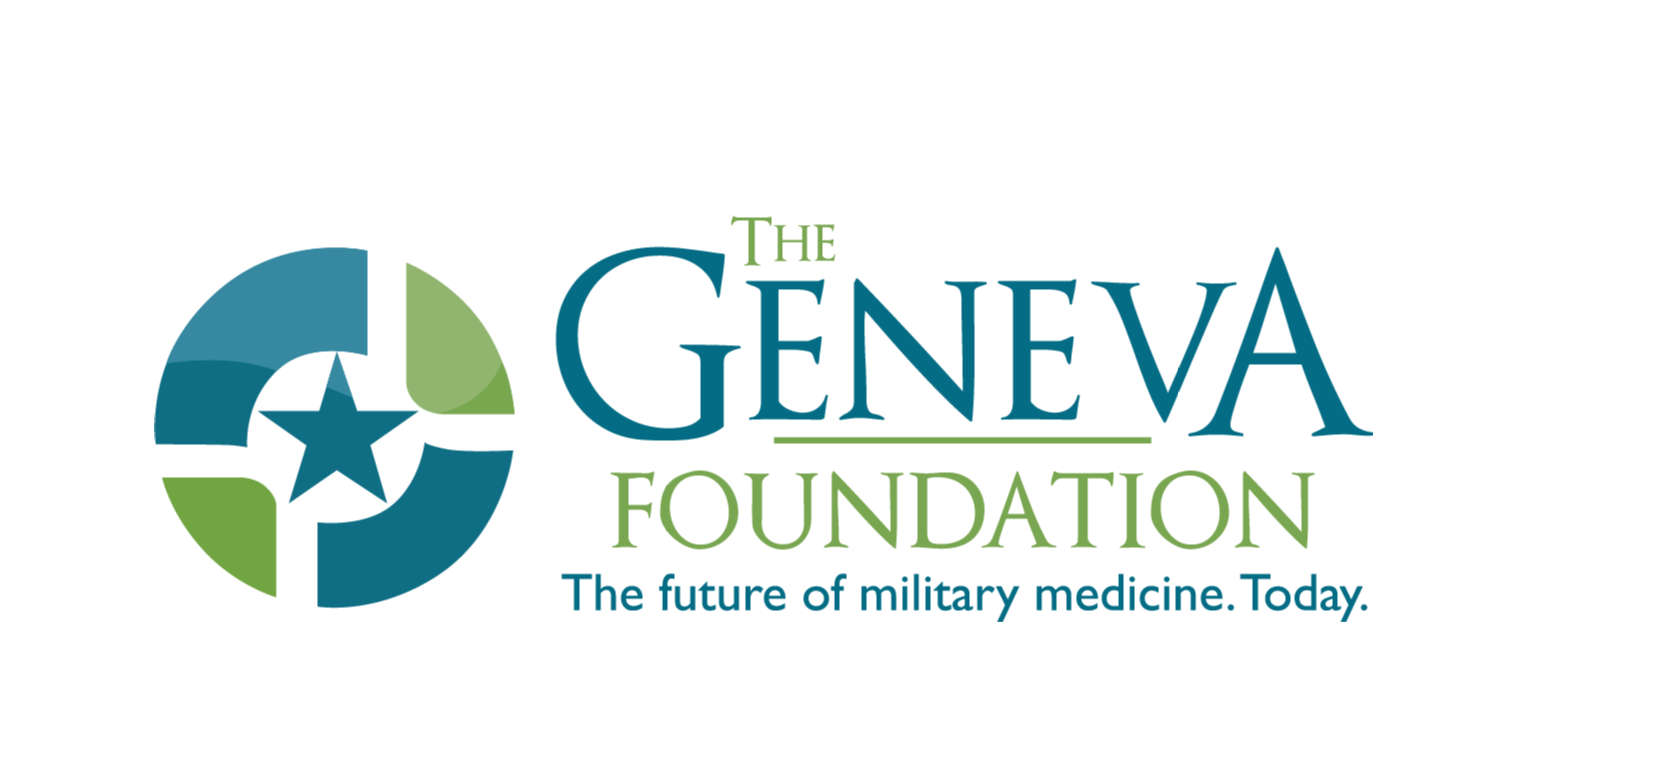 The Geneva Foundation